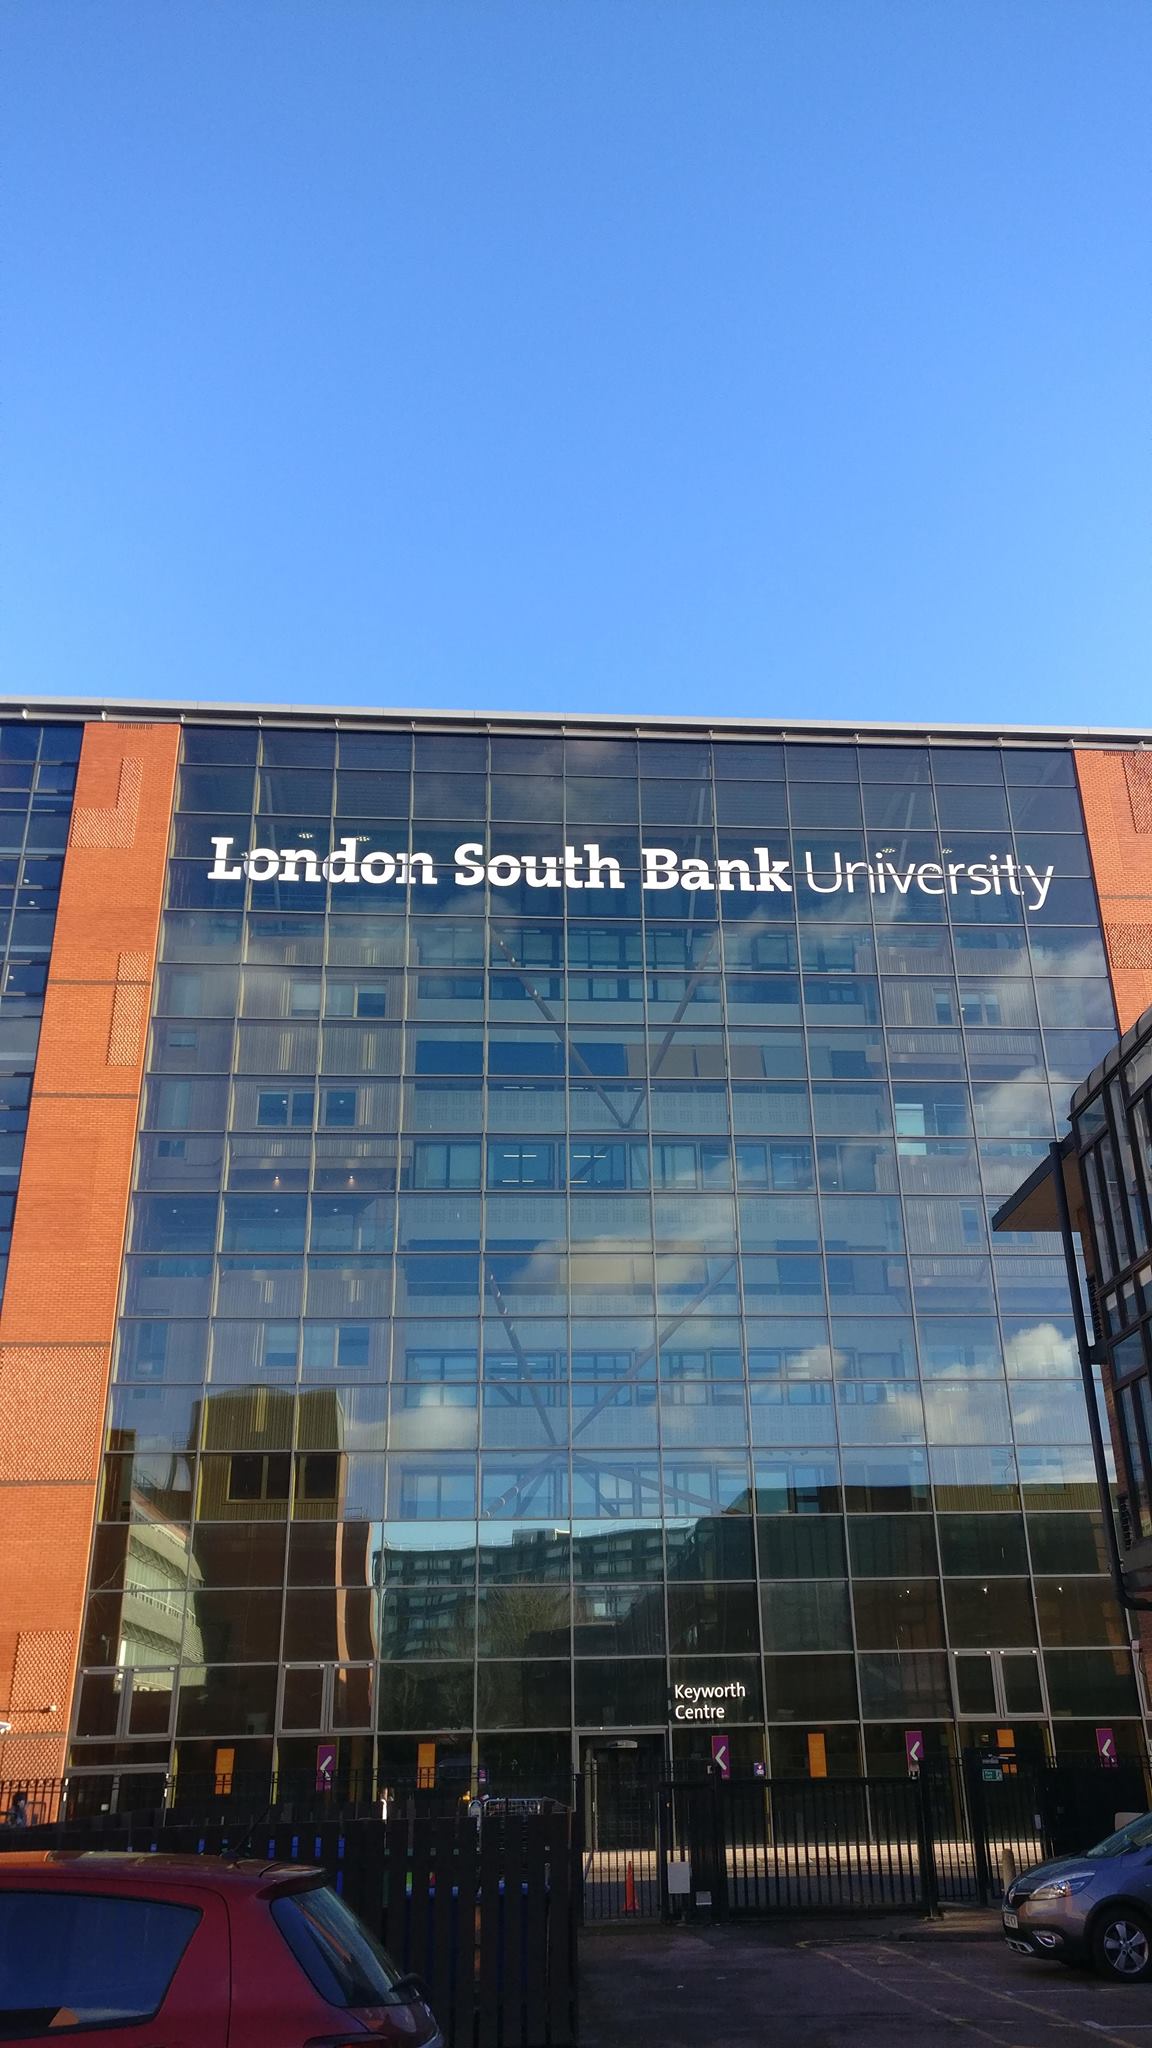 جامعة لندن ساوث بانك – London South Bank University